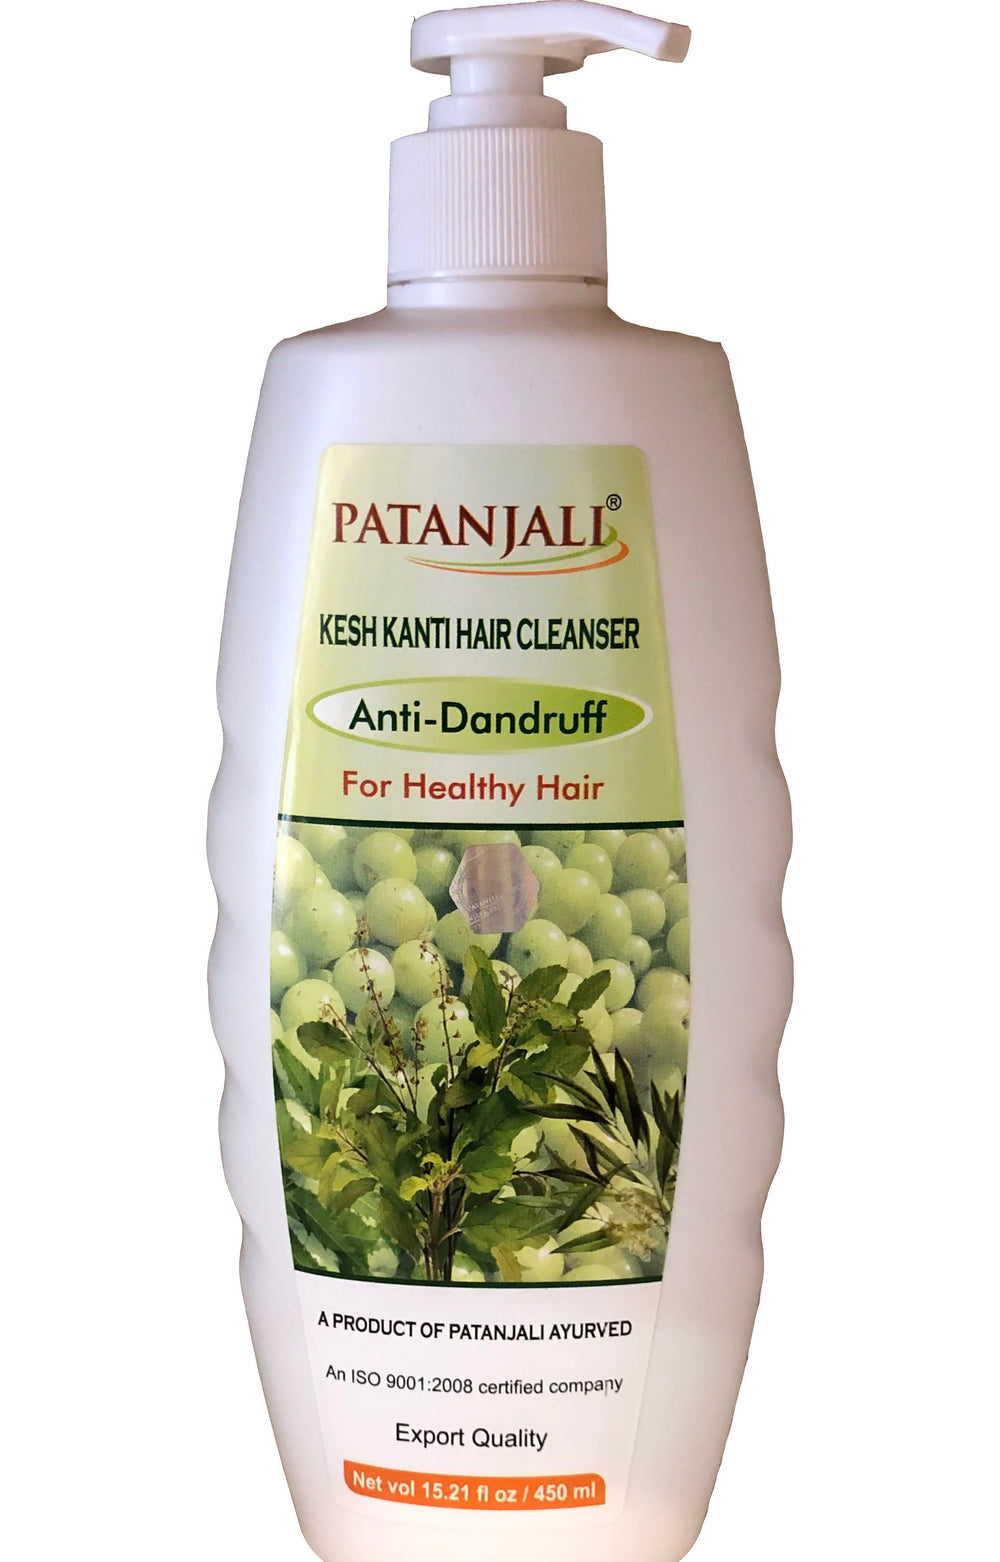 Patanjali Kesh Kanti Hair Cleanser Anti-Dandruff 450ml